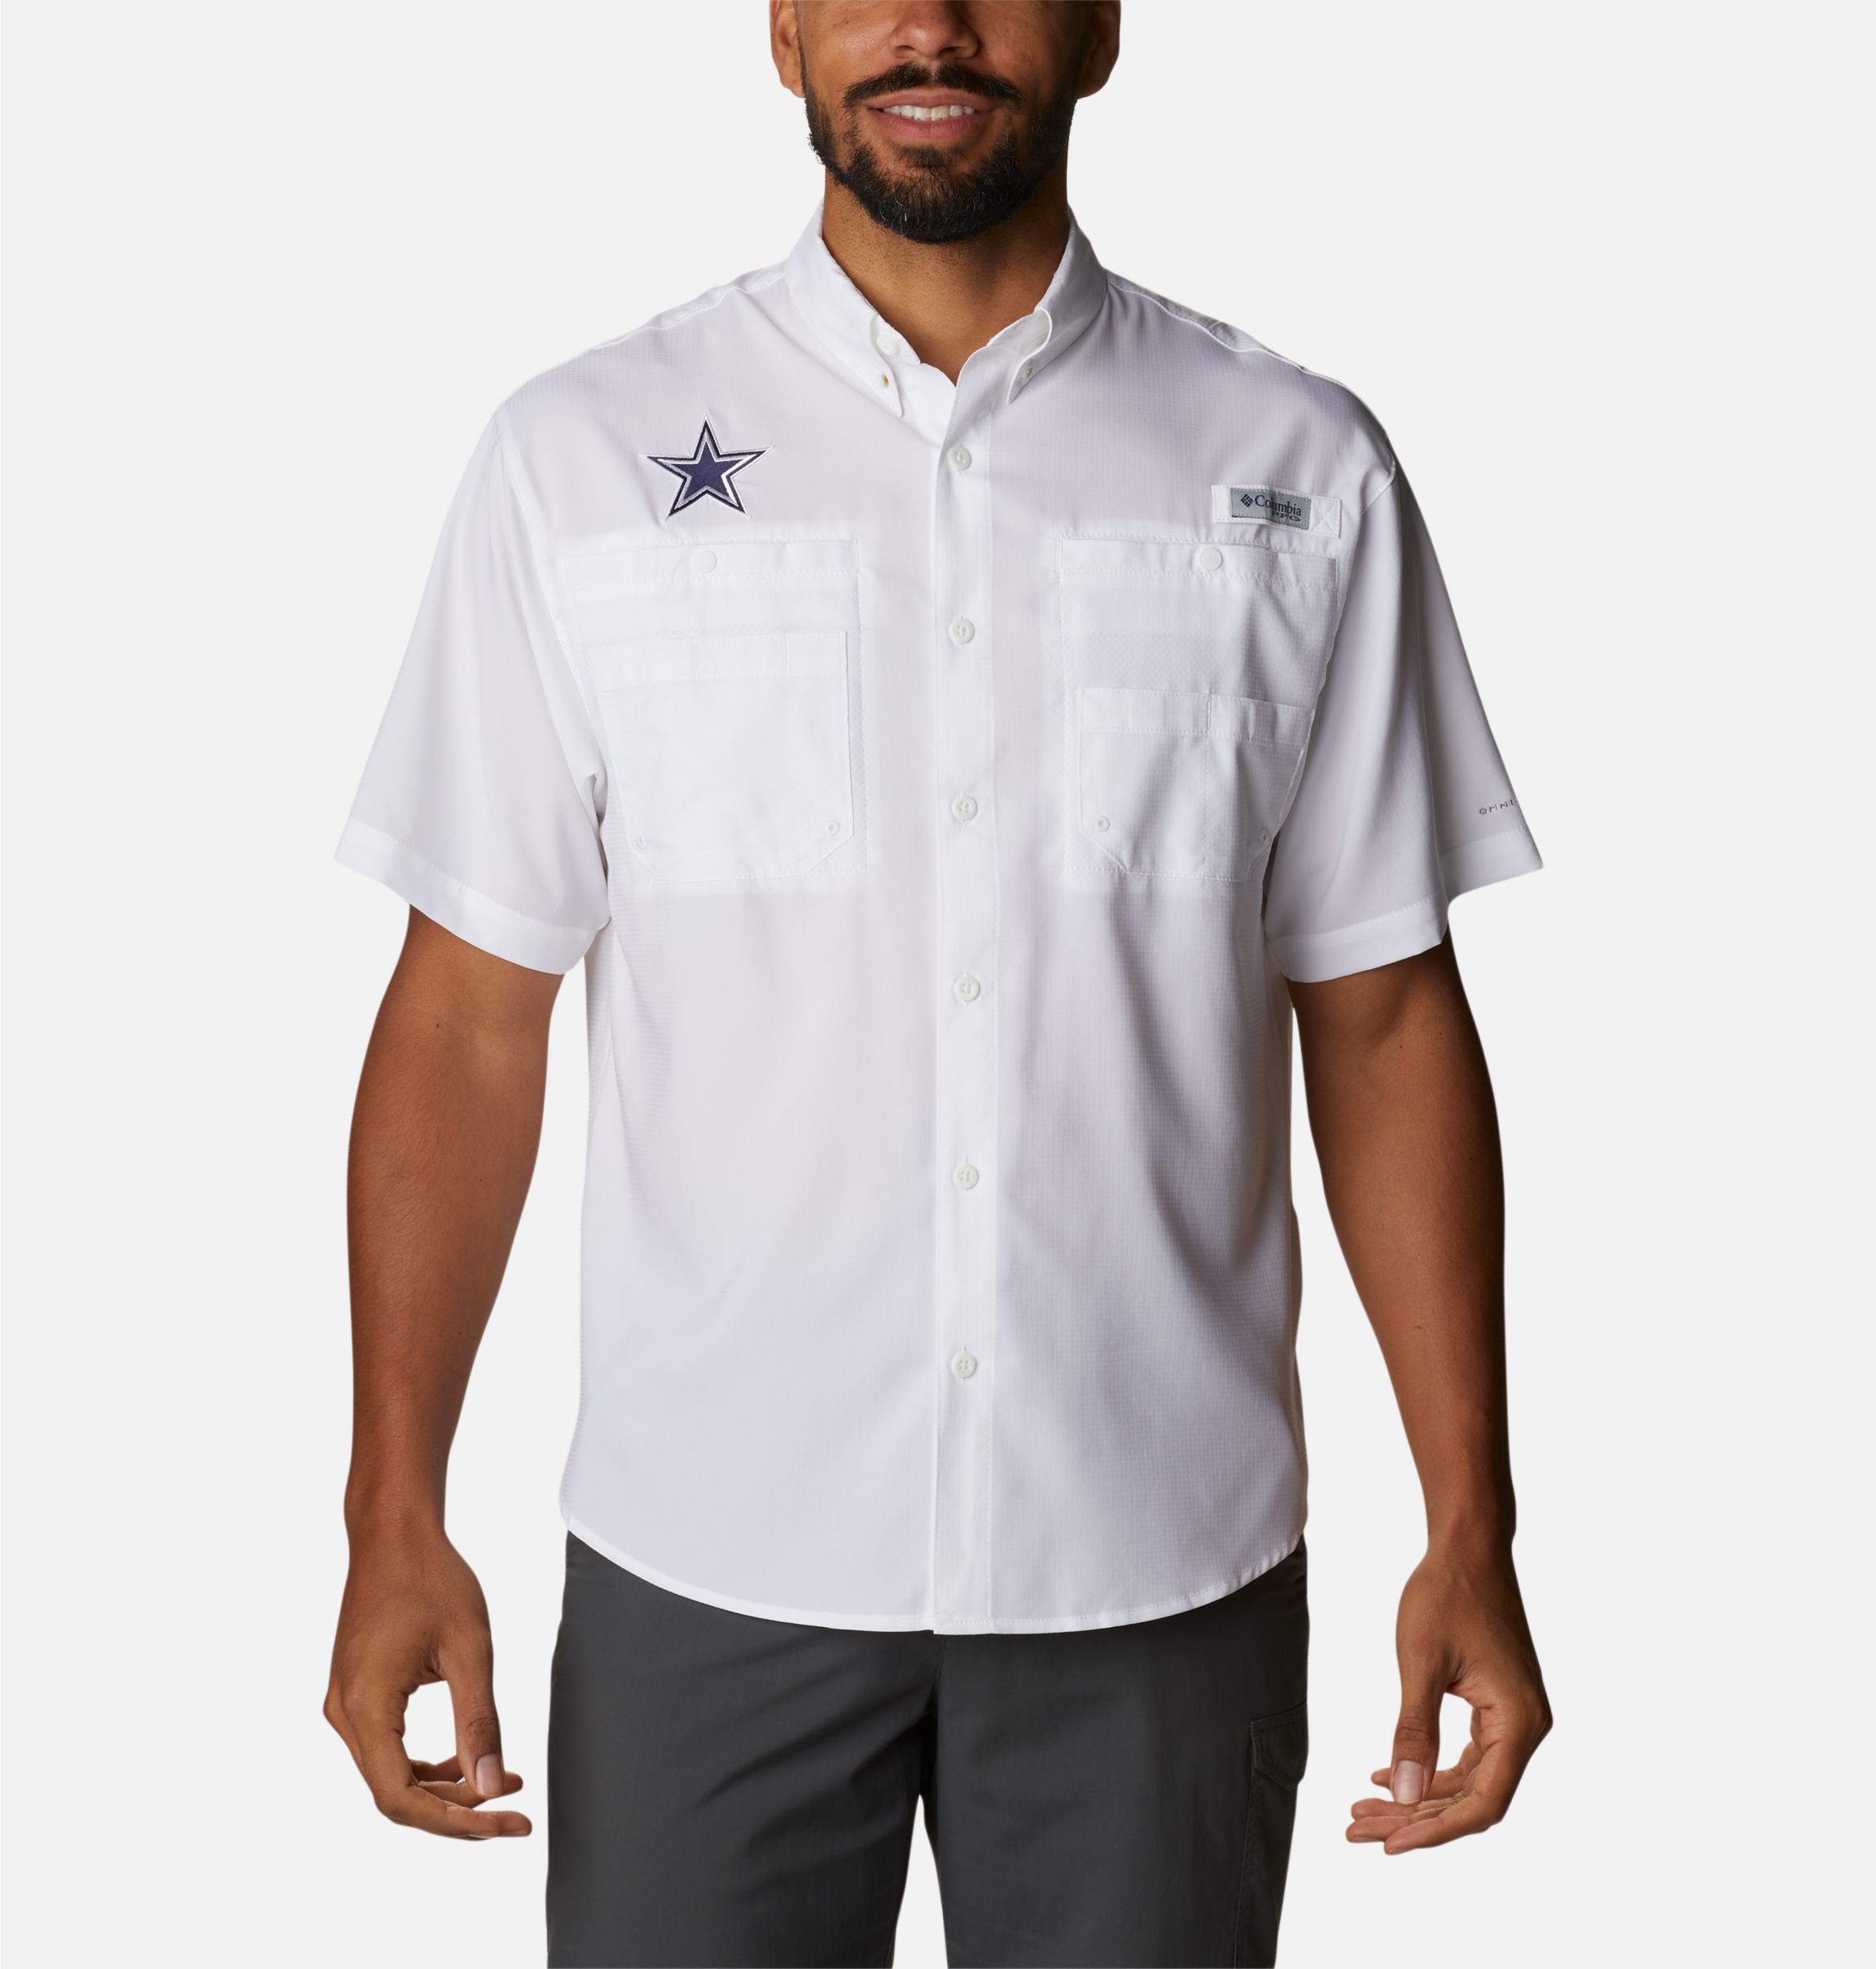 Lids Dallas Cowboys Columbia Big & Tall Bonehead Team Button-Up Shirt -  Navy